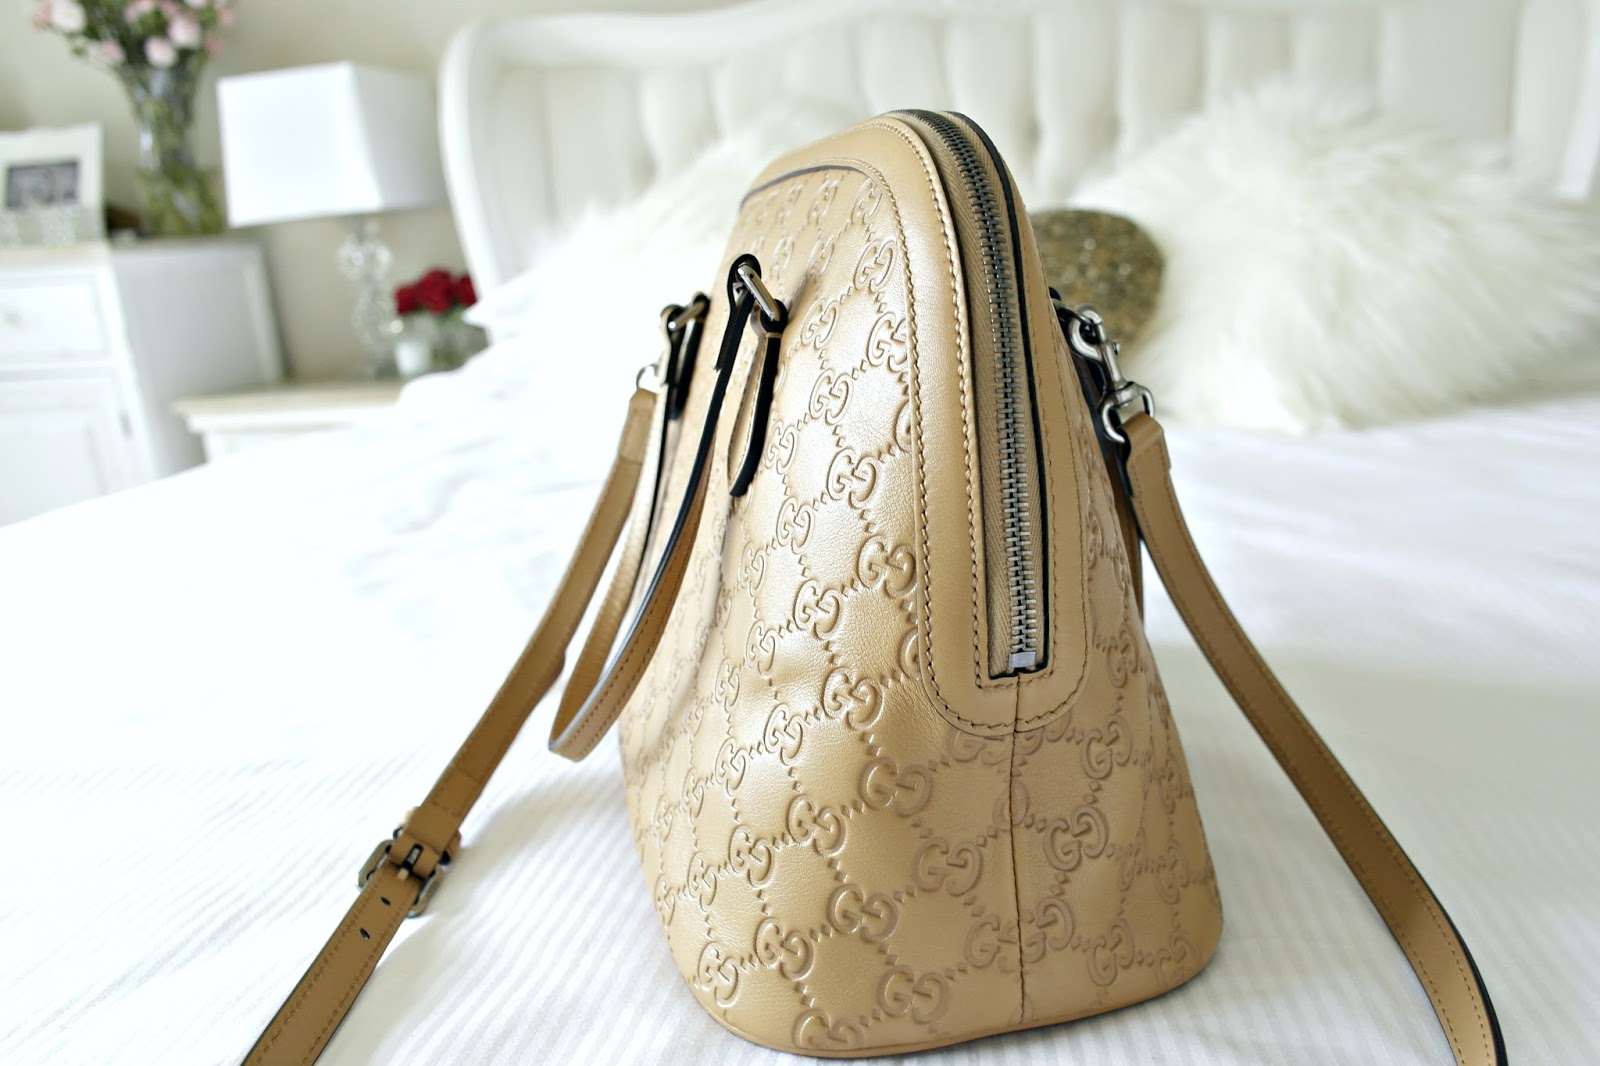 Gucci handbag, bicester village, fashion blogger